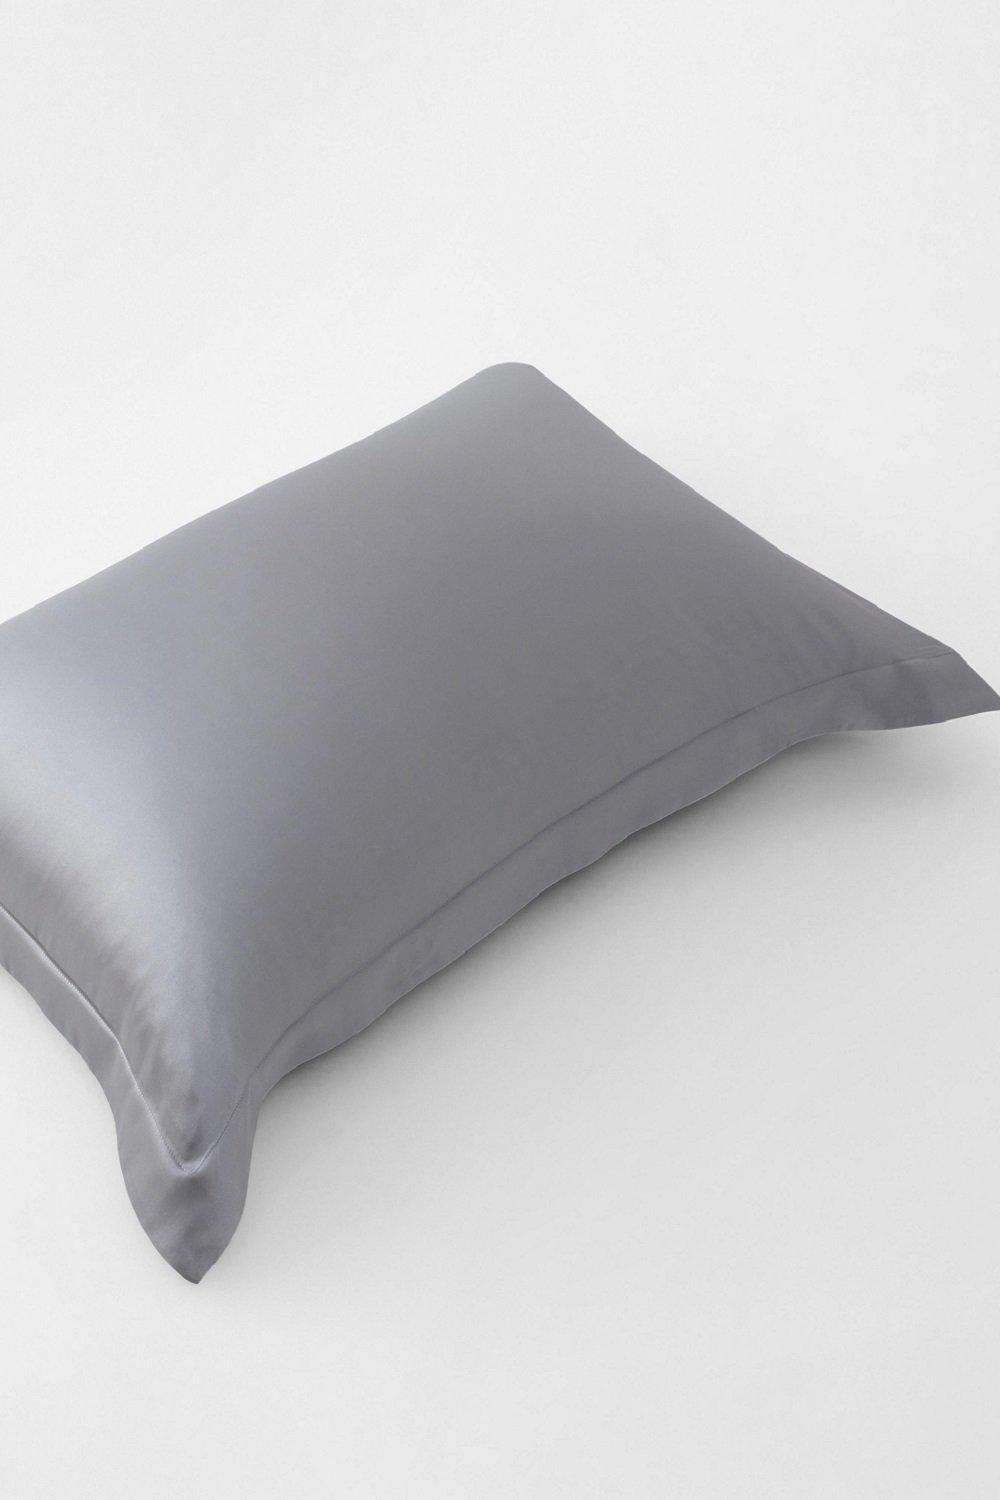 Lanham Tailored Pillowcase